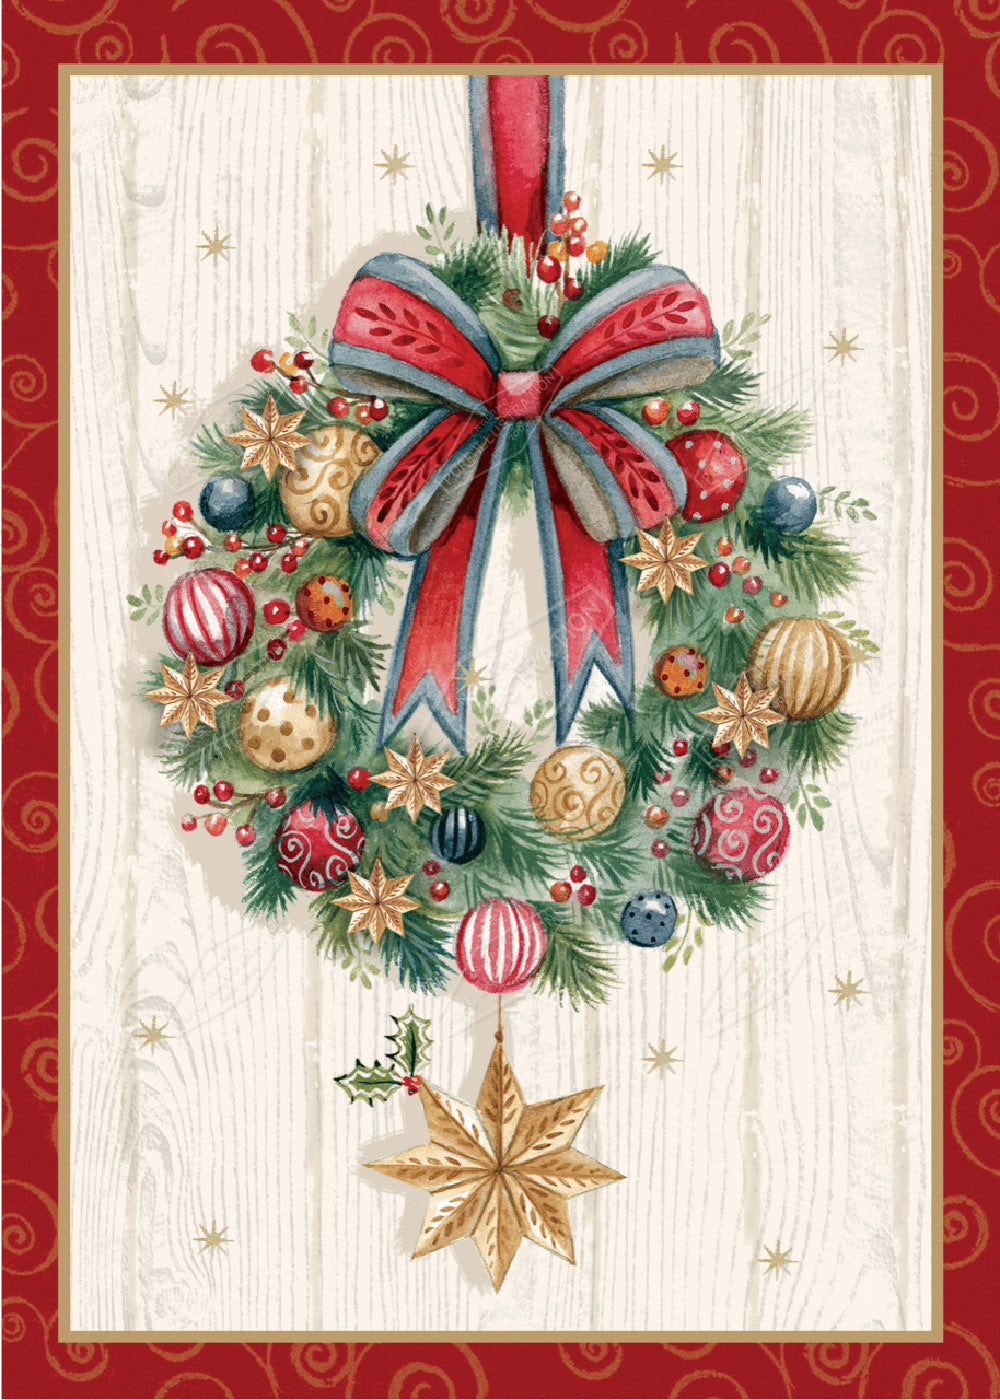 00032857DEV - Deva Evans is represented by Pure Art Licensing Agency - Christmas Greeting Card Design